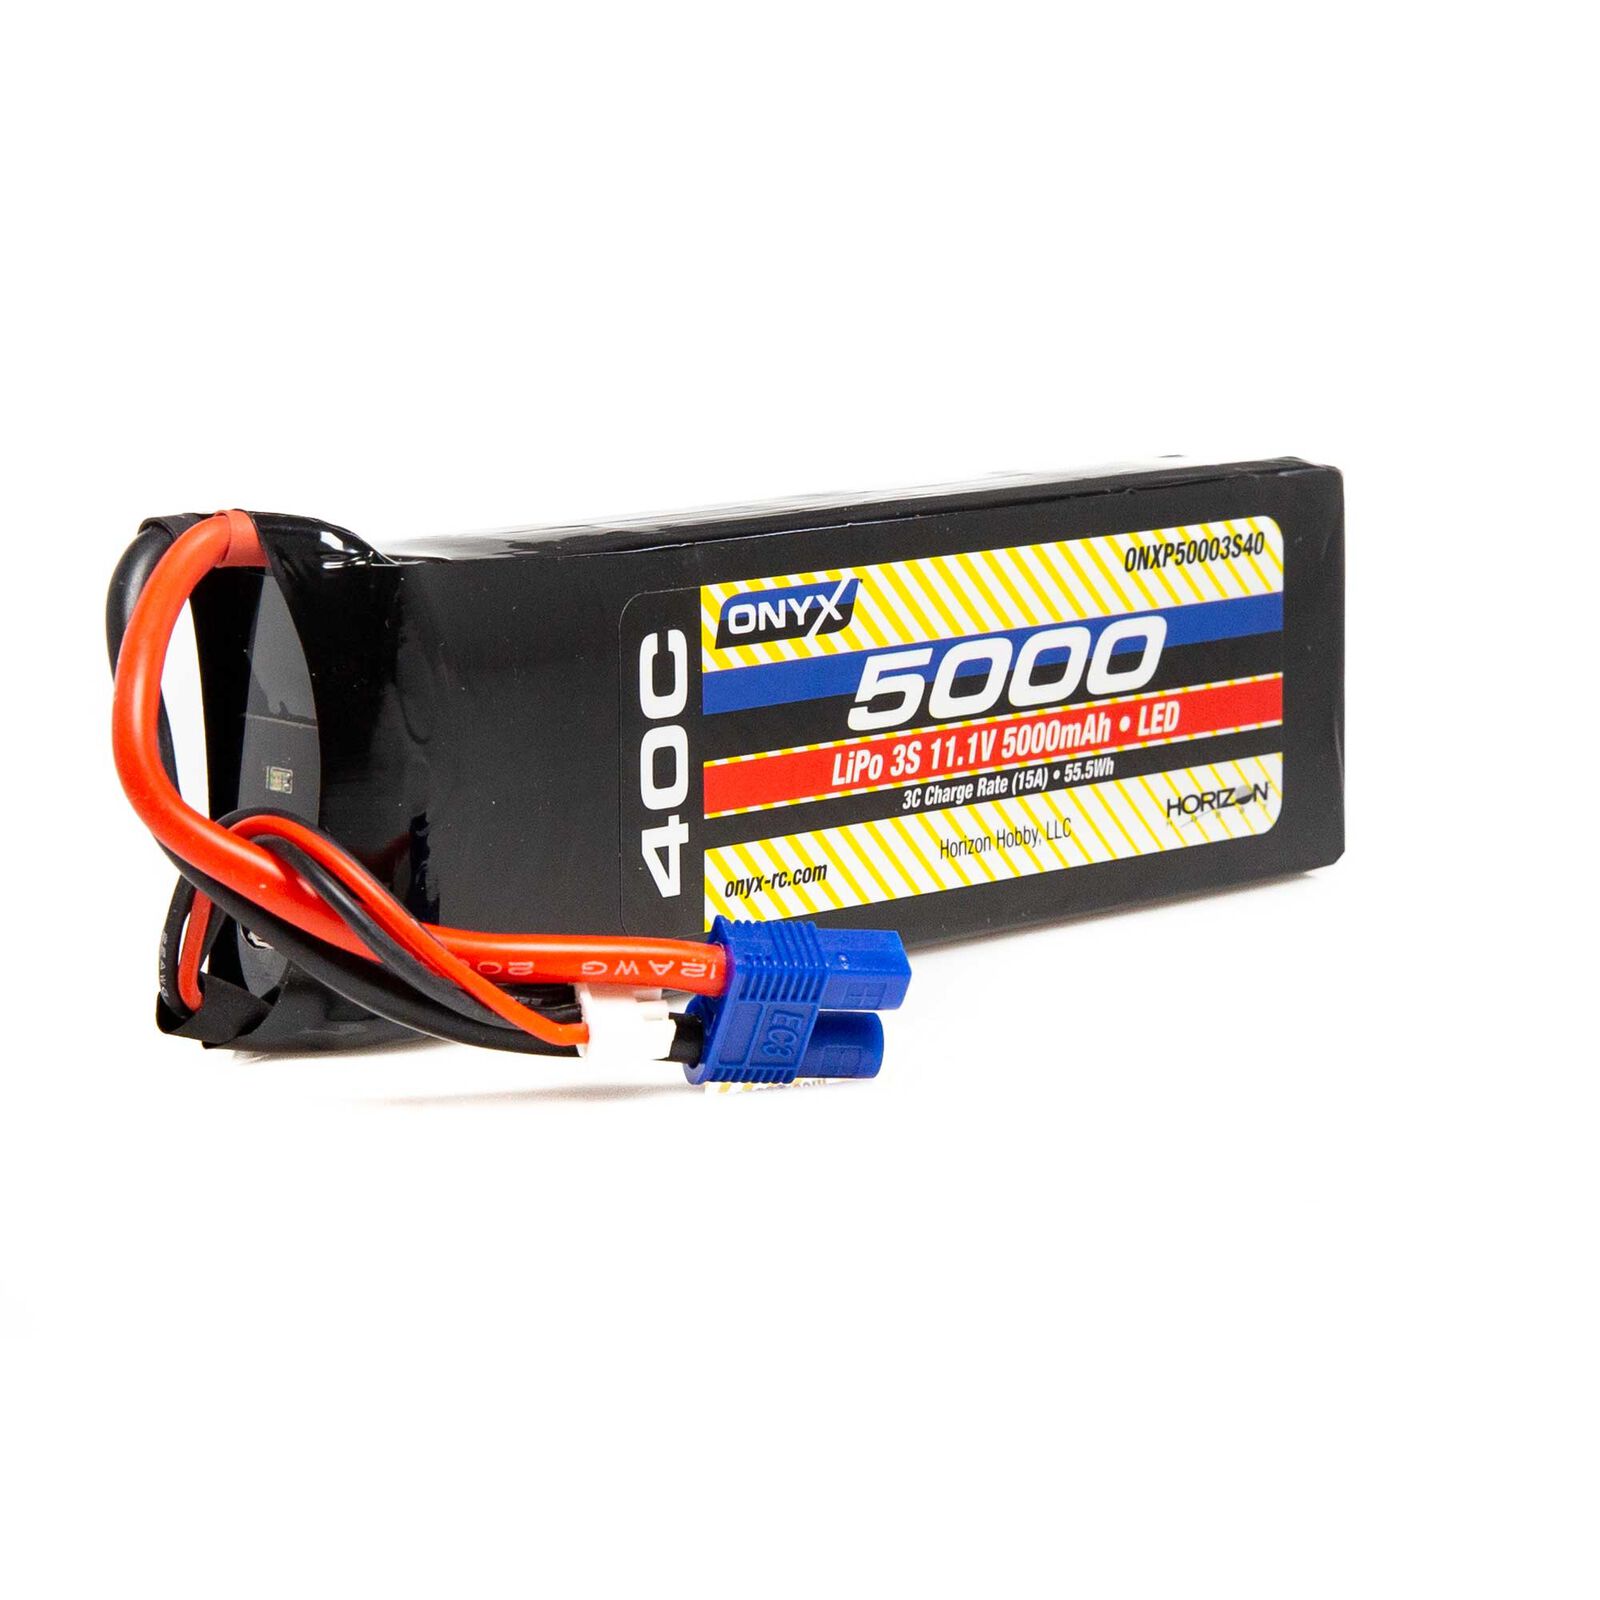 11.1V 5000mAh 3S 40C LiPo Battery: EC3